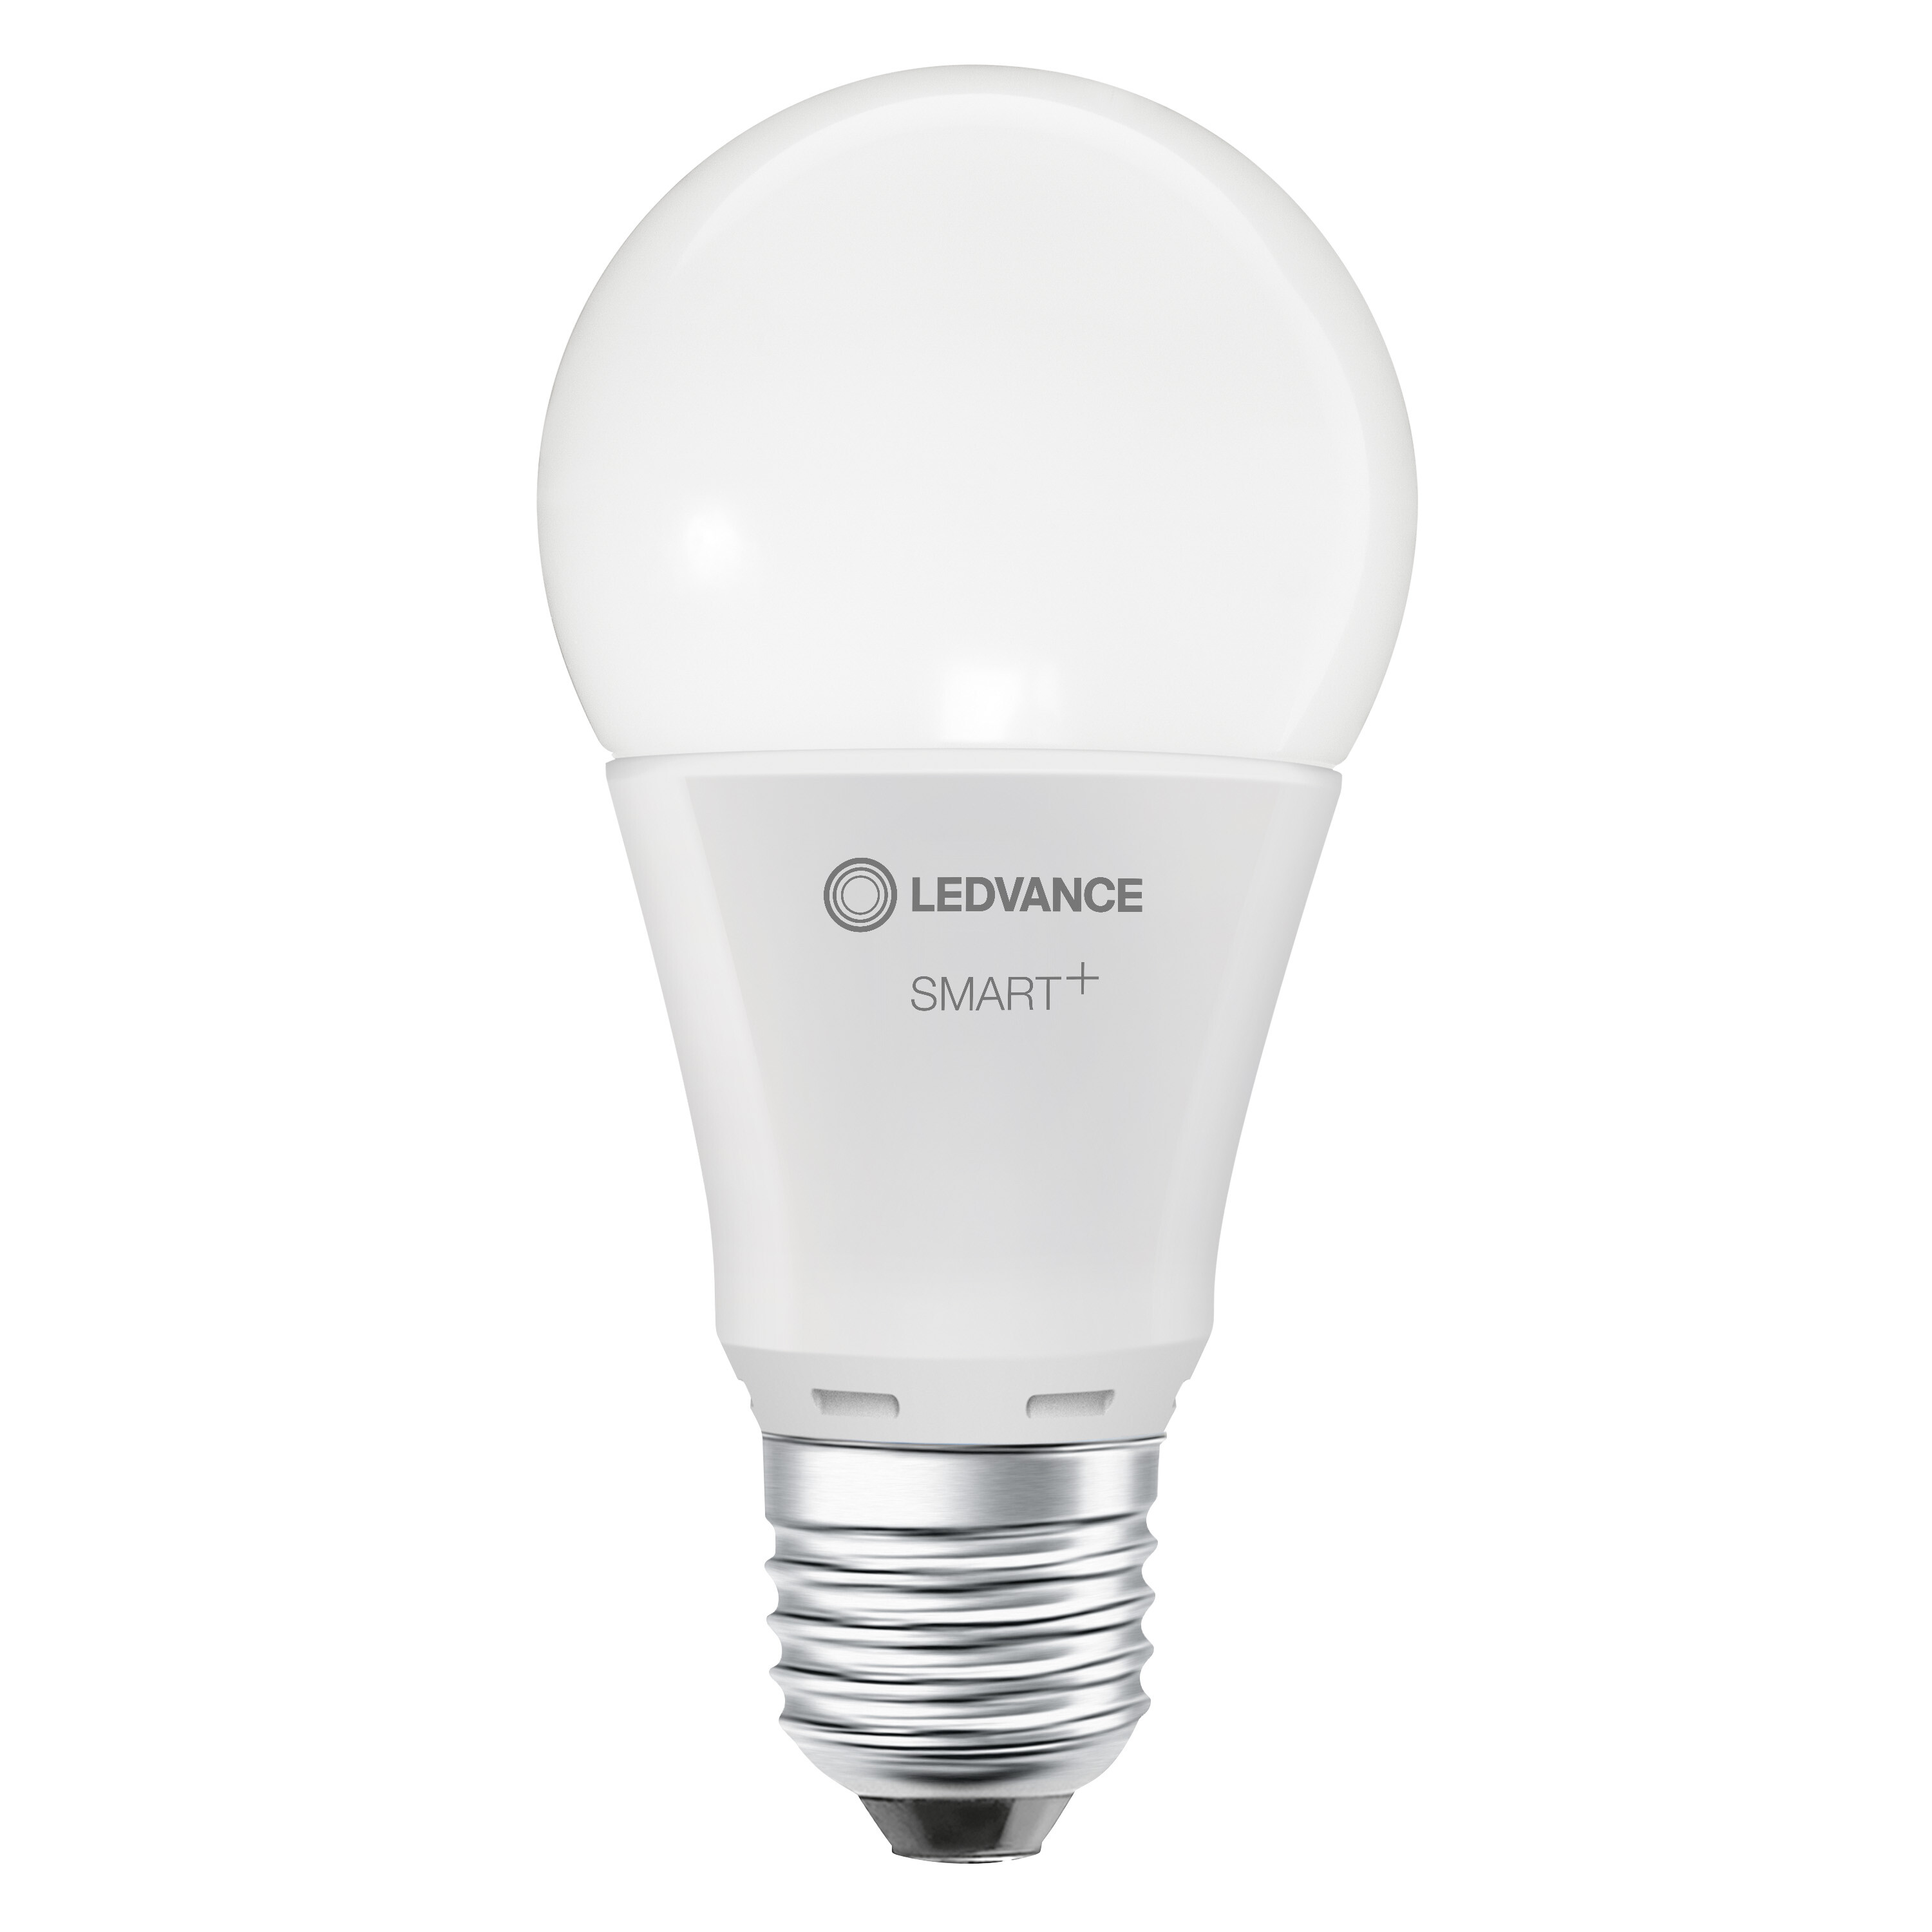 Classic LED Lampe LEDVANCE SMART+ Smarte Dimmable Warmweiß